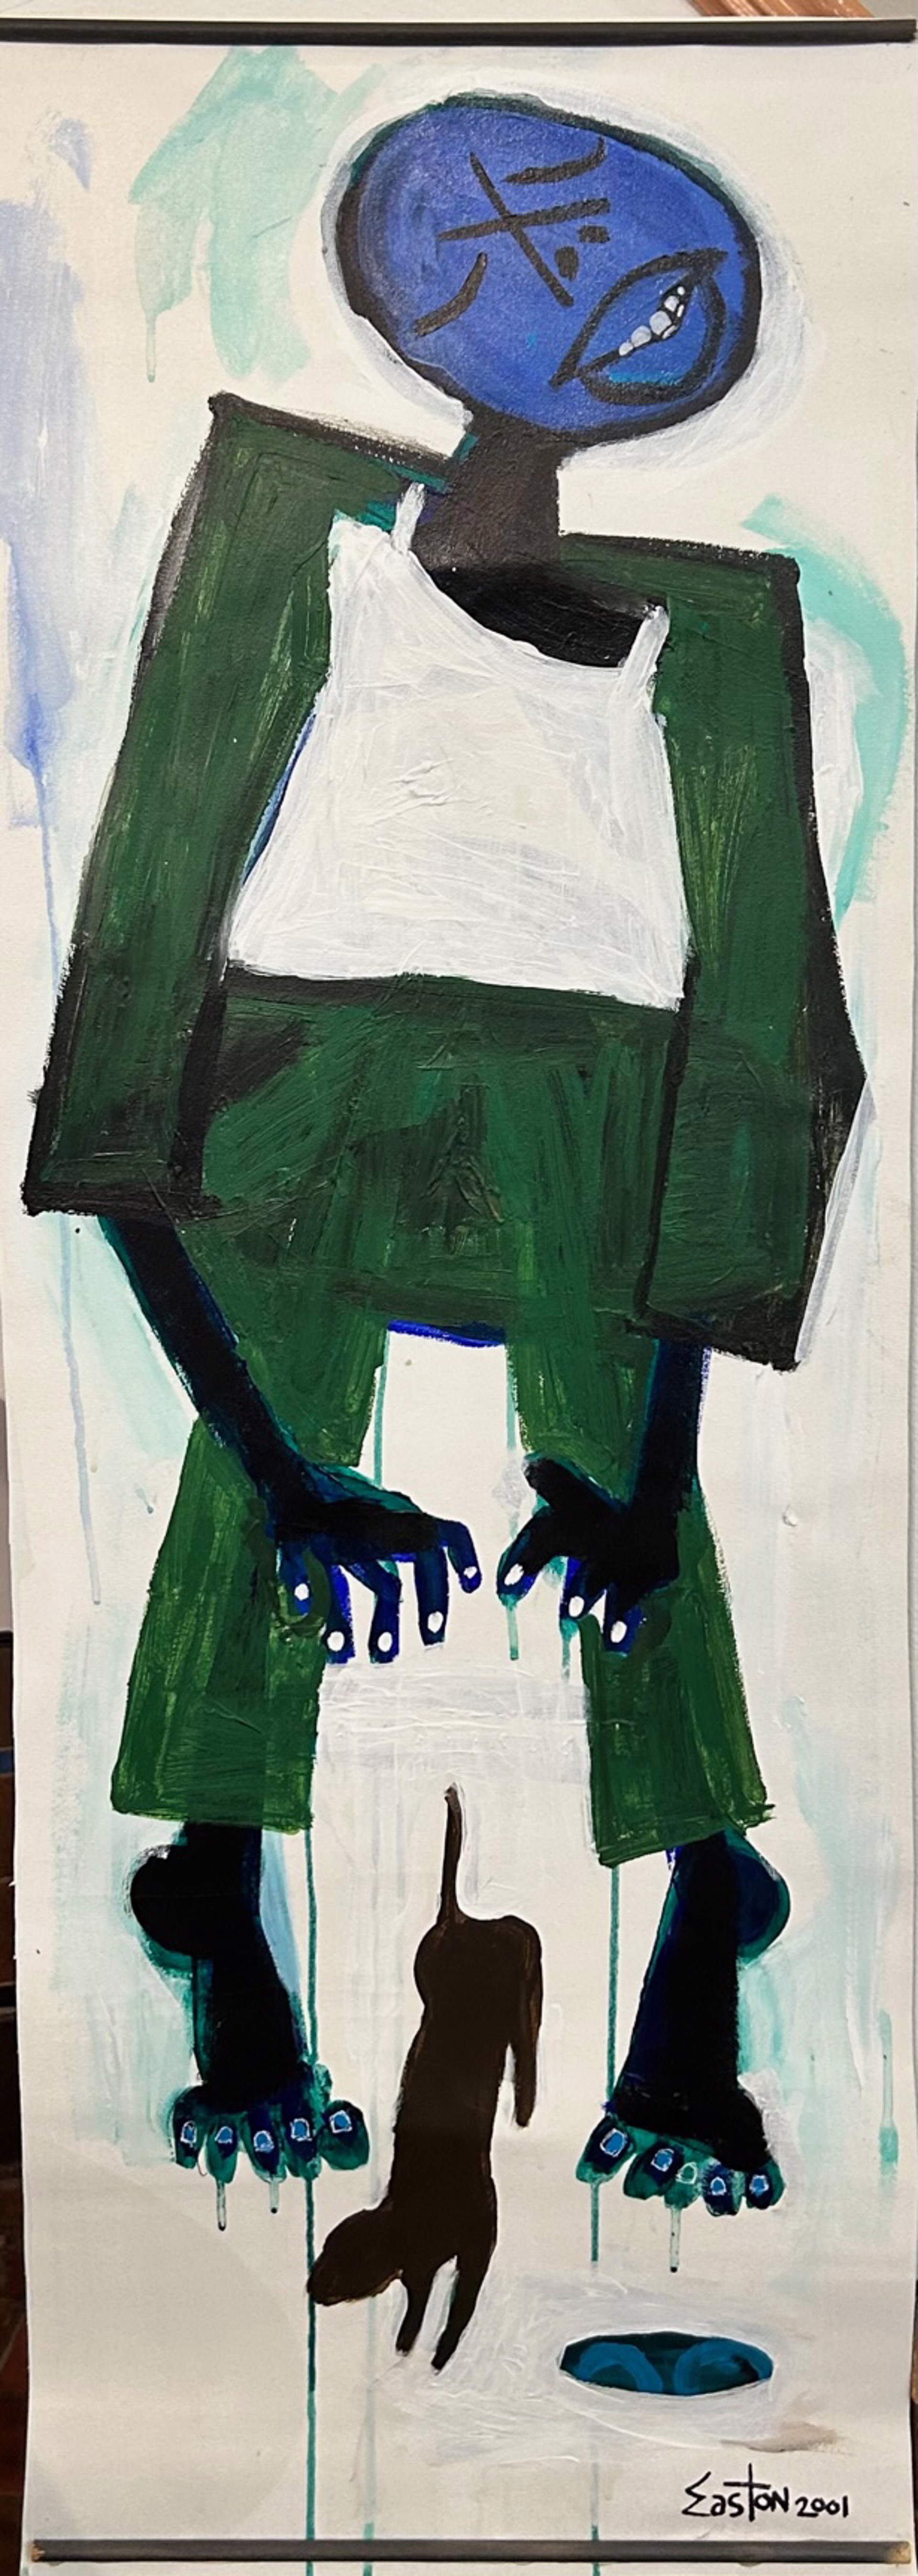 "Boy in Green" by Easton Davy